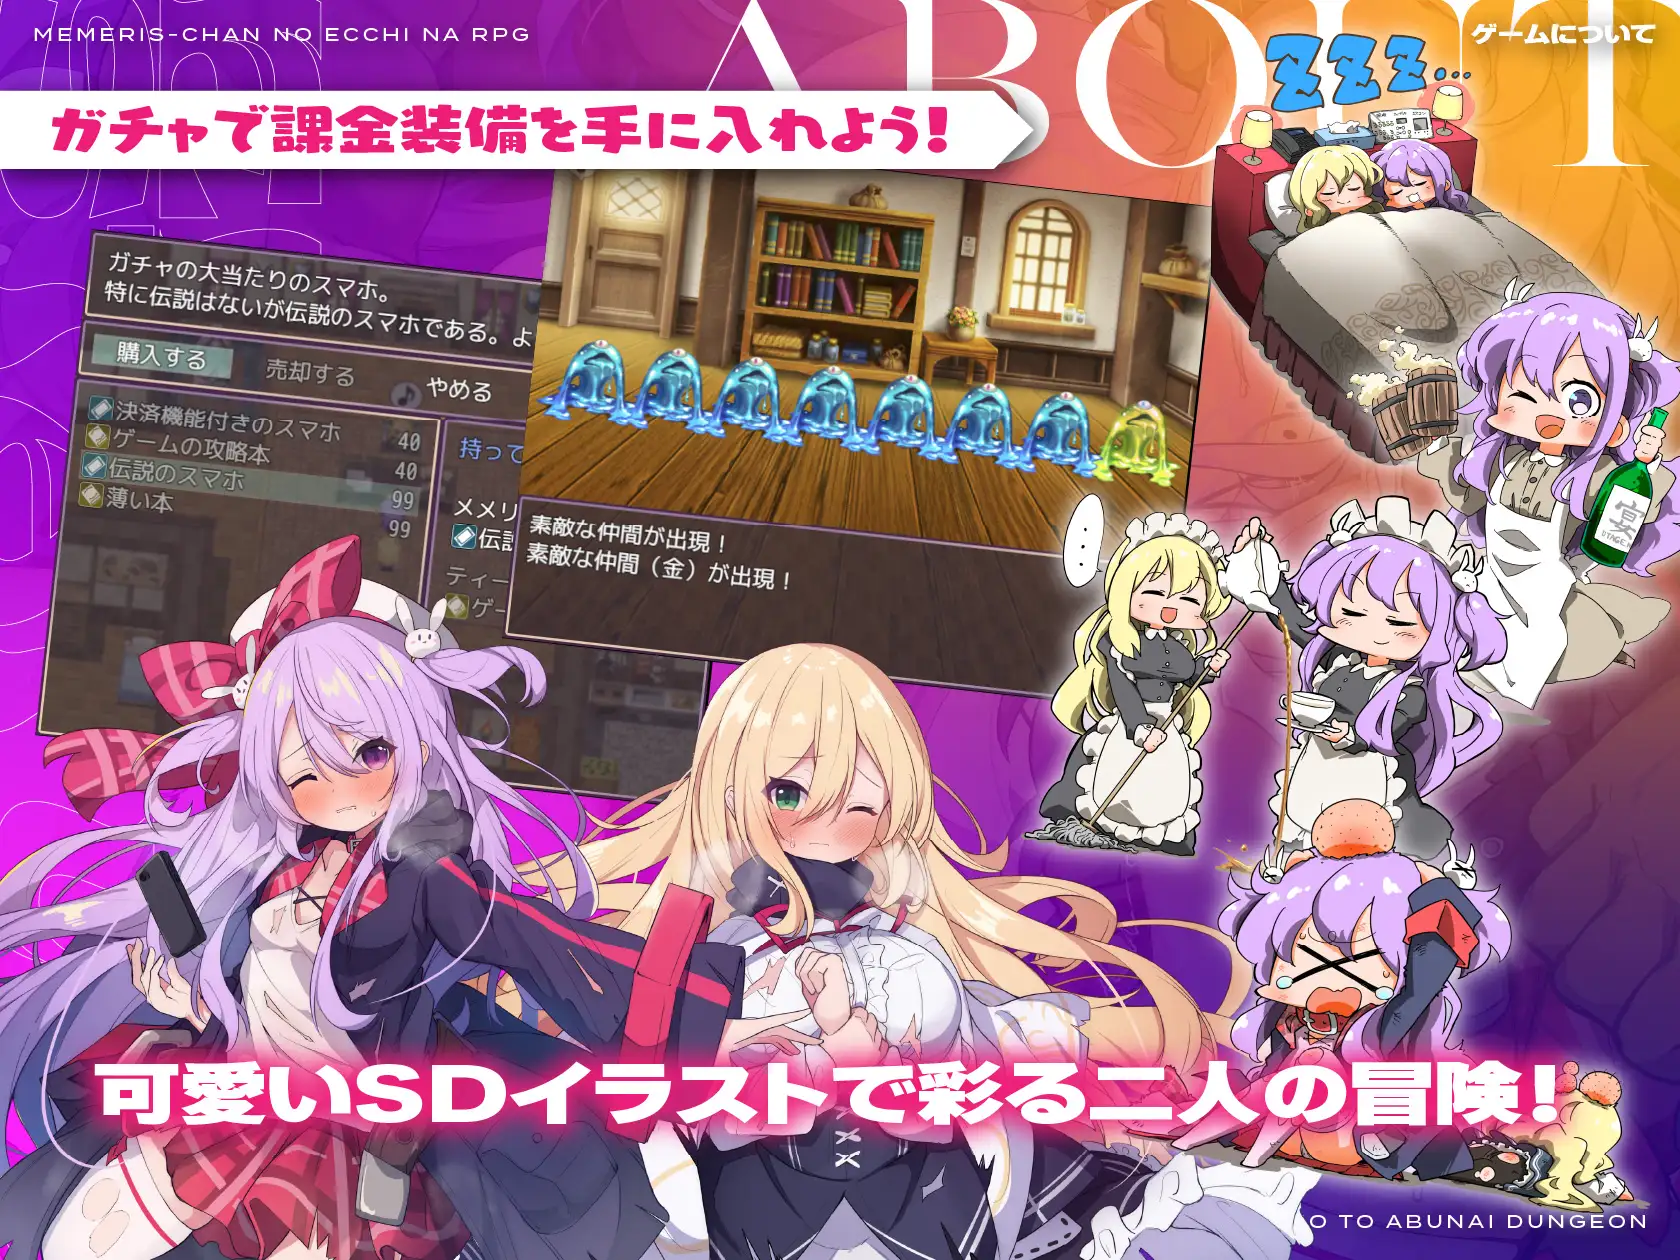 Memerisu-chan's Naughty RPG v1.0 Android Port